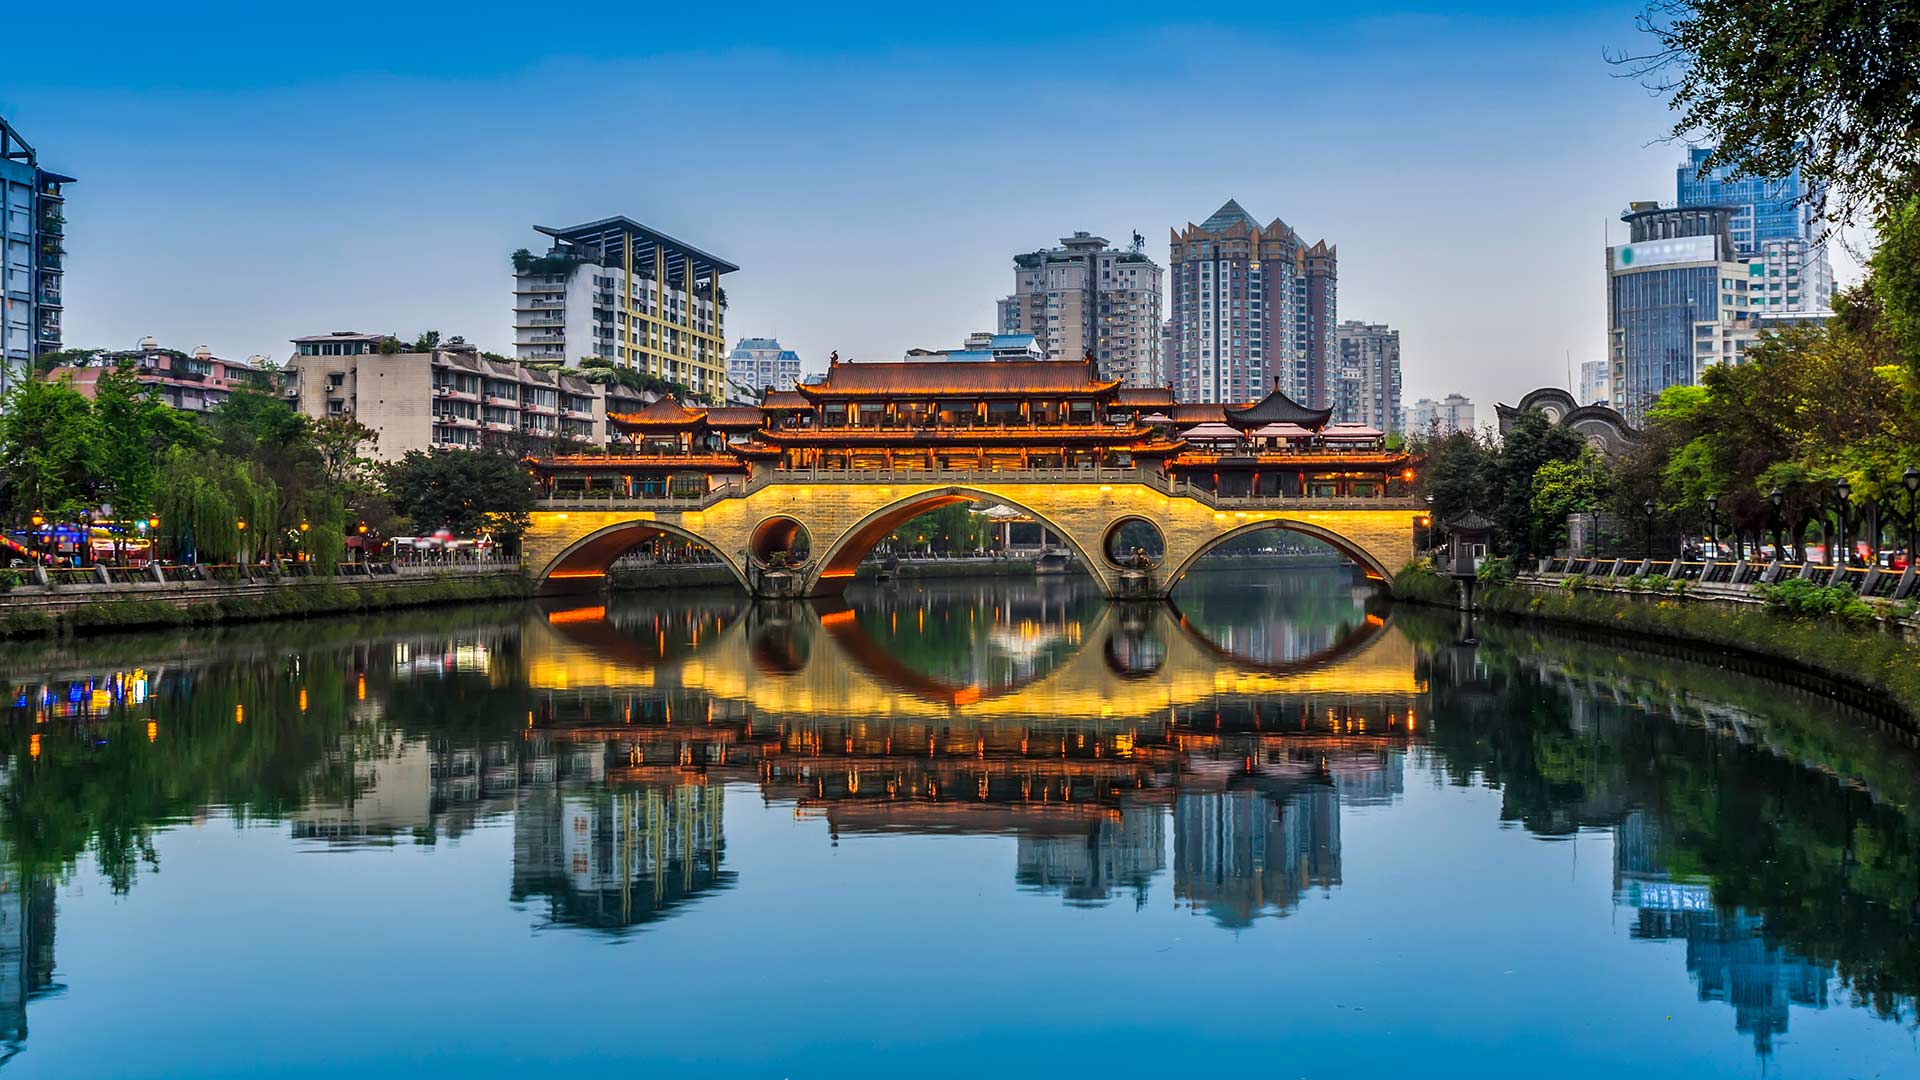 Urban architectural landscape in Jinjiang Chengdu